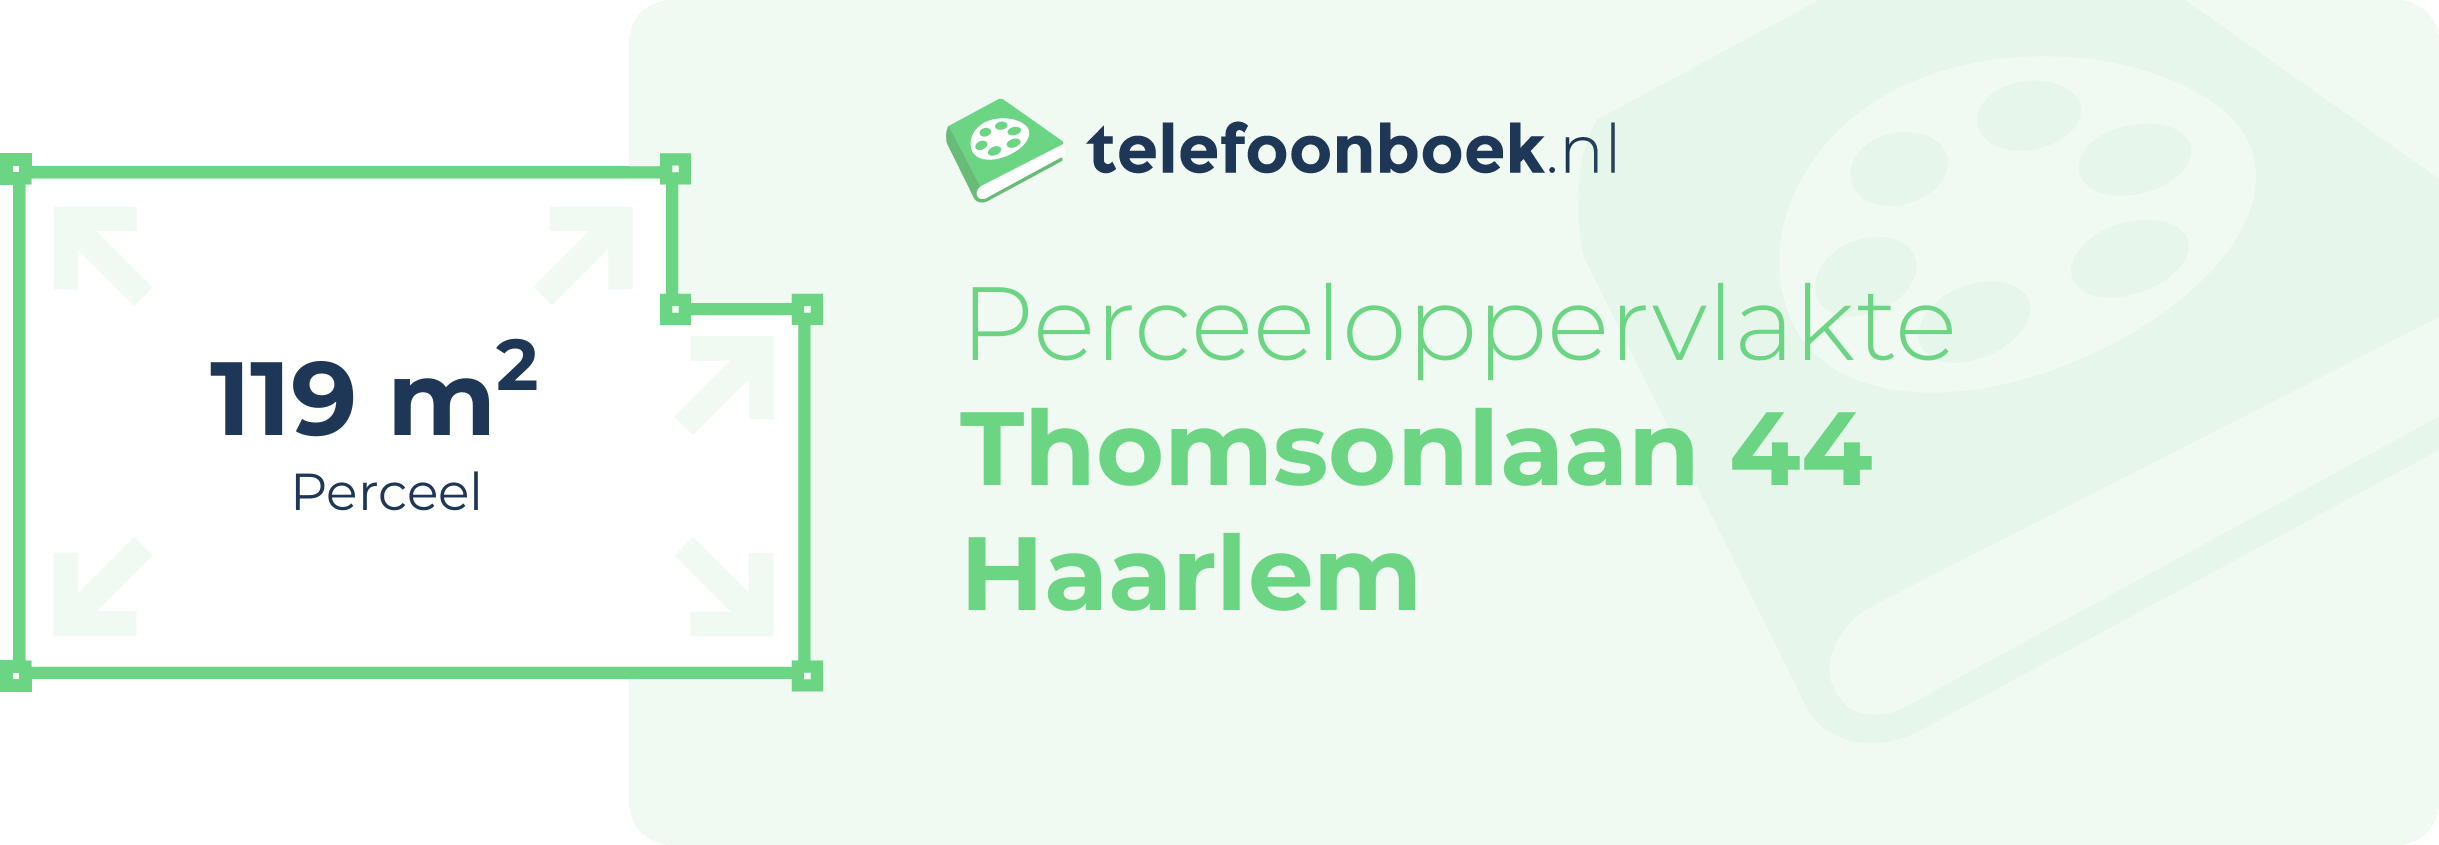 Perceeloppervlakte Thomsonlaan 44 Haarlem